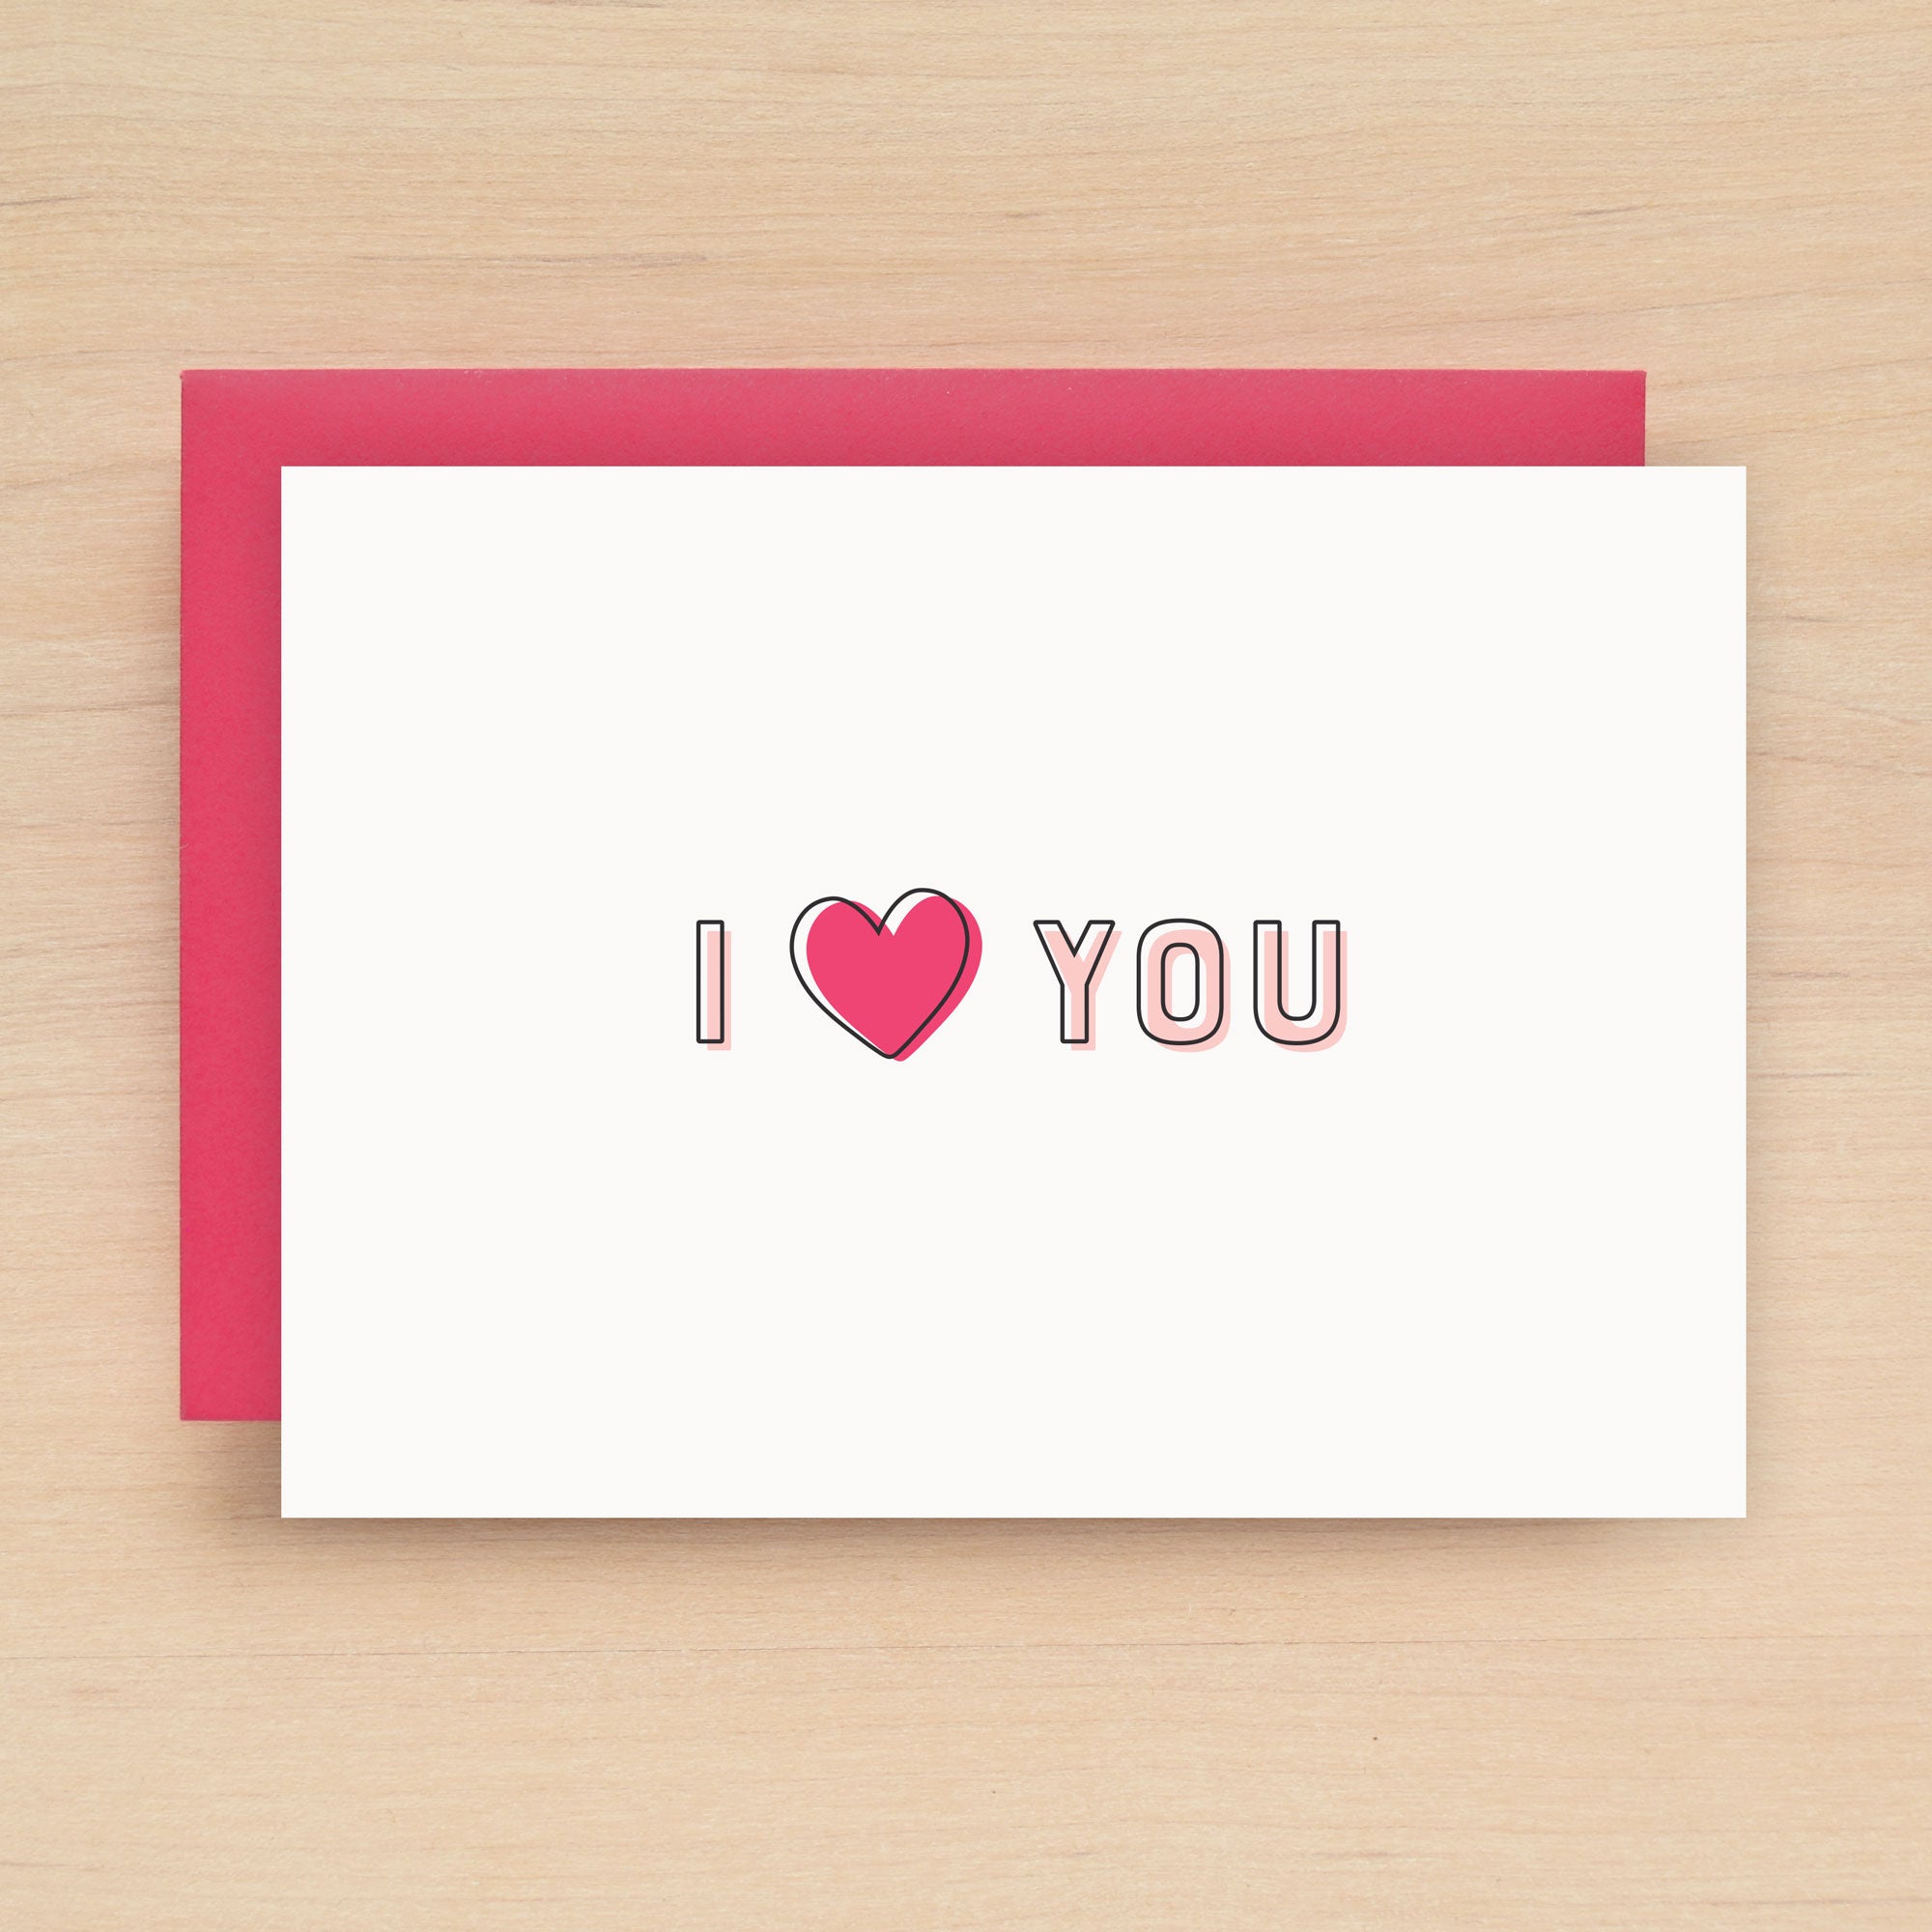 "I love you" Heart You Greeting Card #268